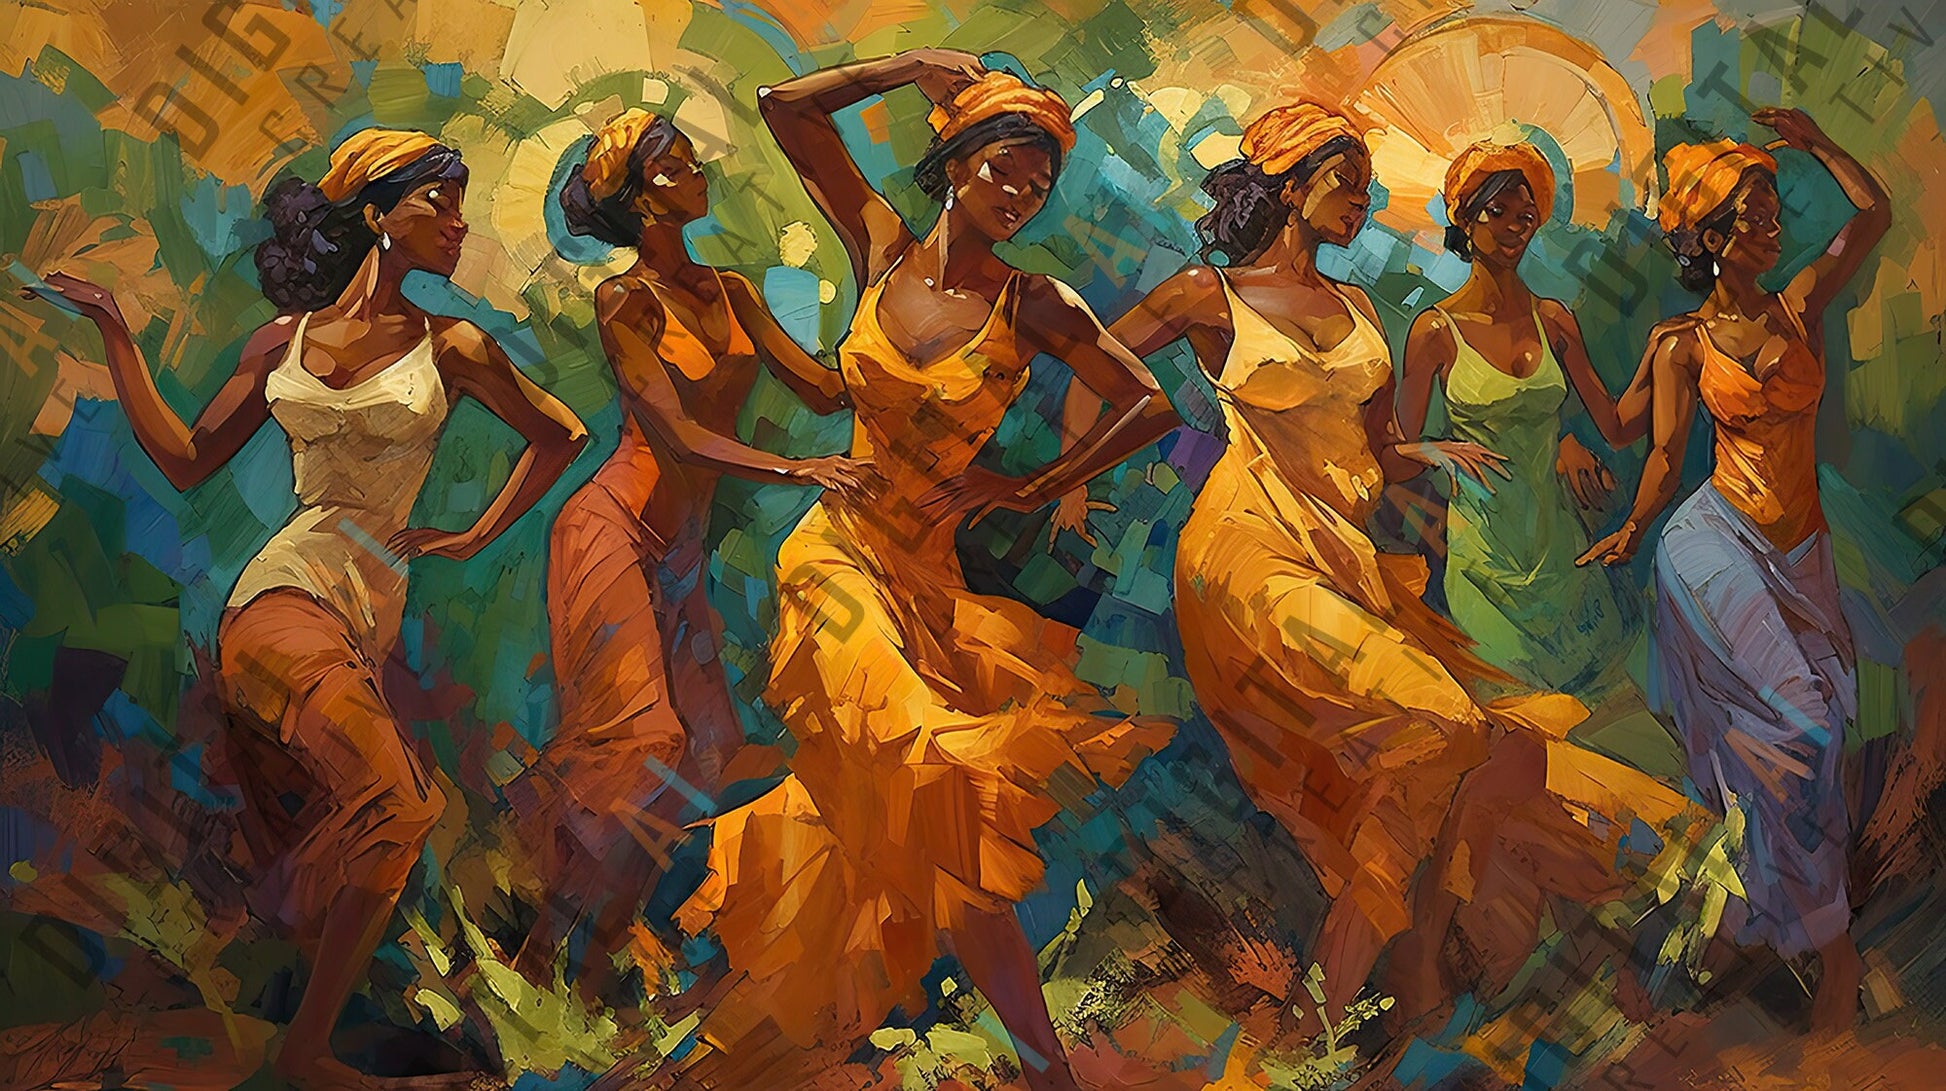 Digital Illustration Package - X5 Dancing in Color - Celebrating Black and African Women - 8736 x 4896 @300DPI